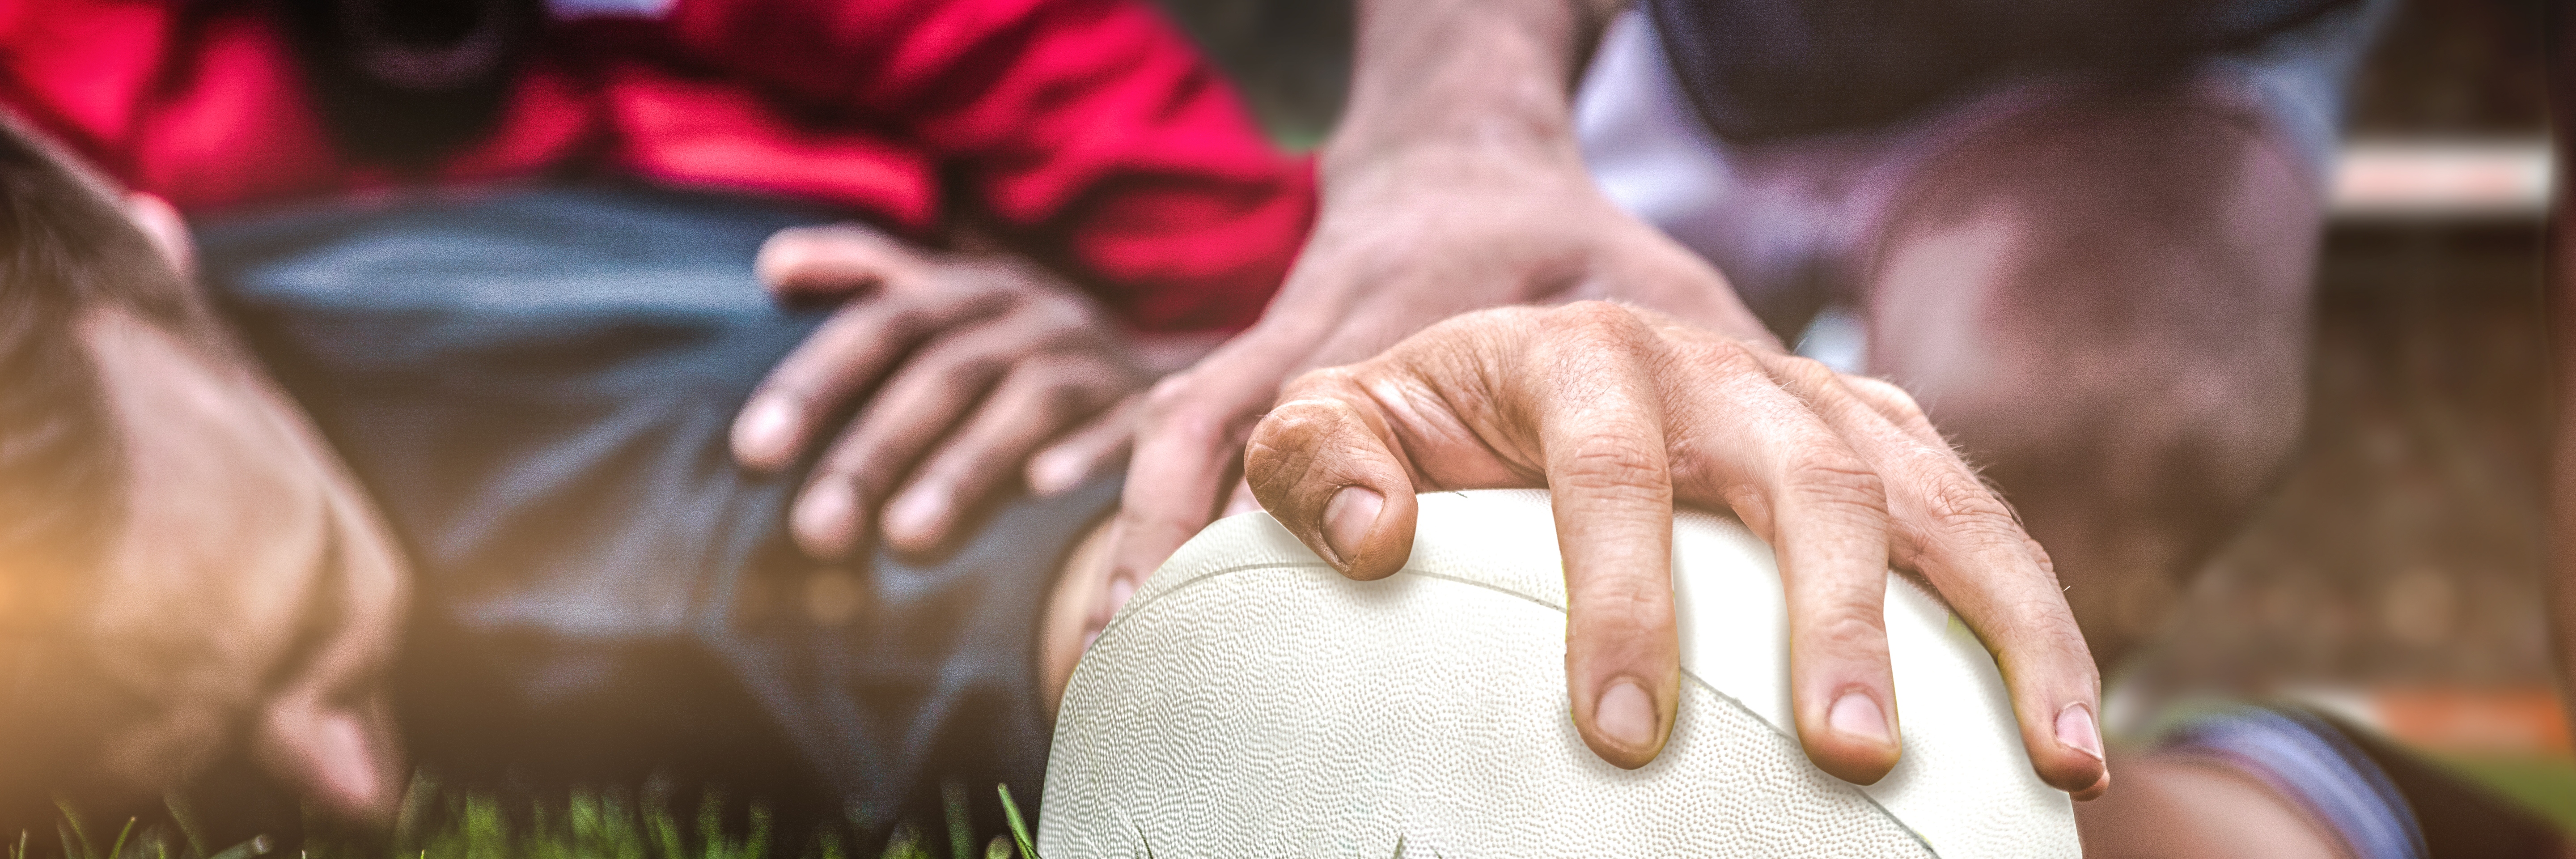 Rugby World Cup: Komplexe Risiken im Griff